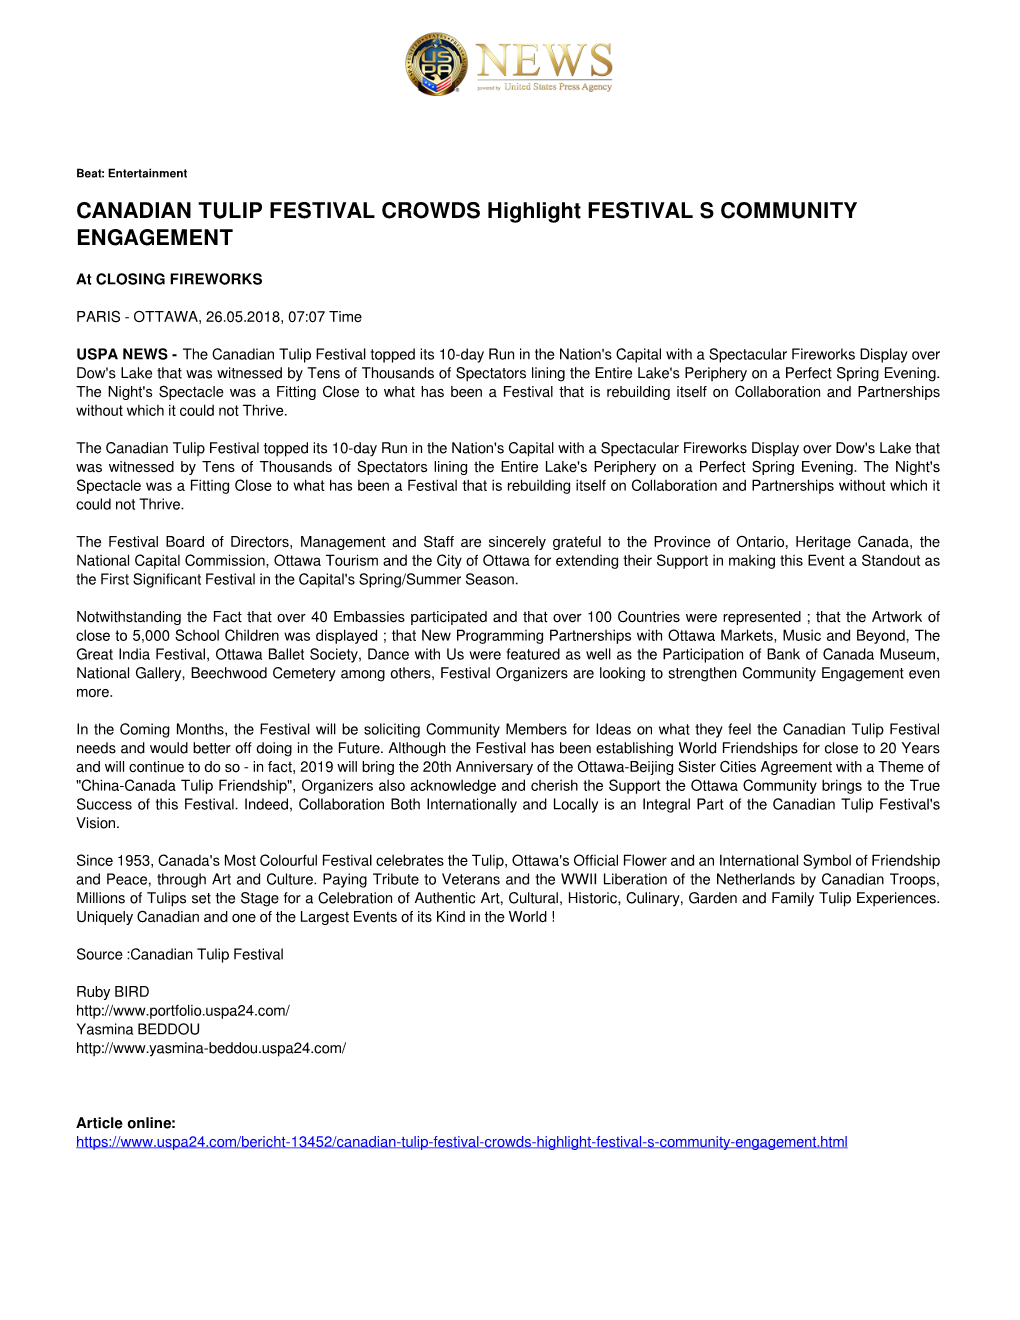 CANADIAN TULIP FESTIVAL CROWDS Highlight FESTIVAL S COMMUNITY ENGAGEMENT